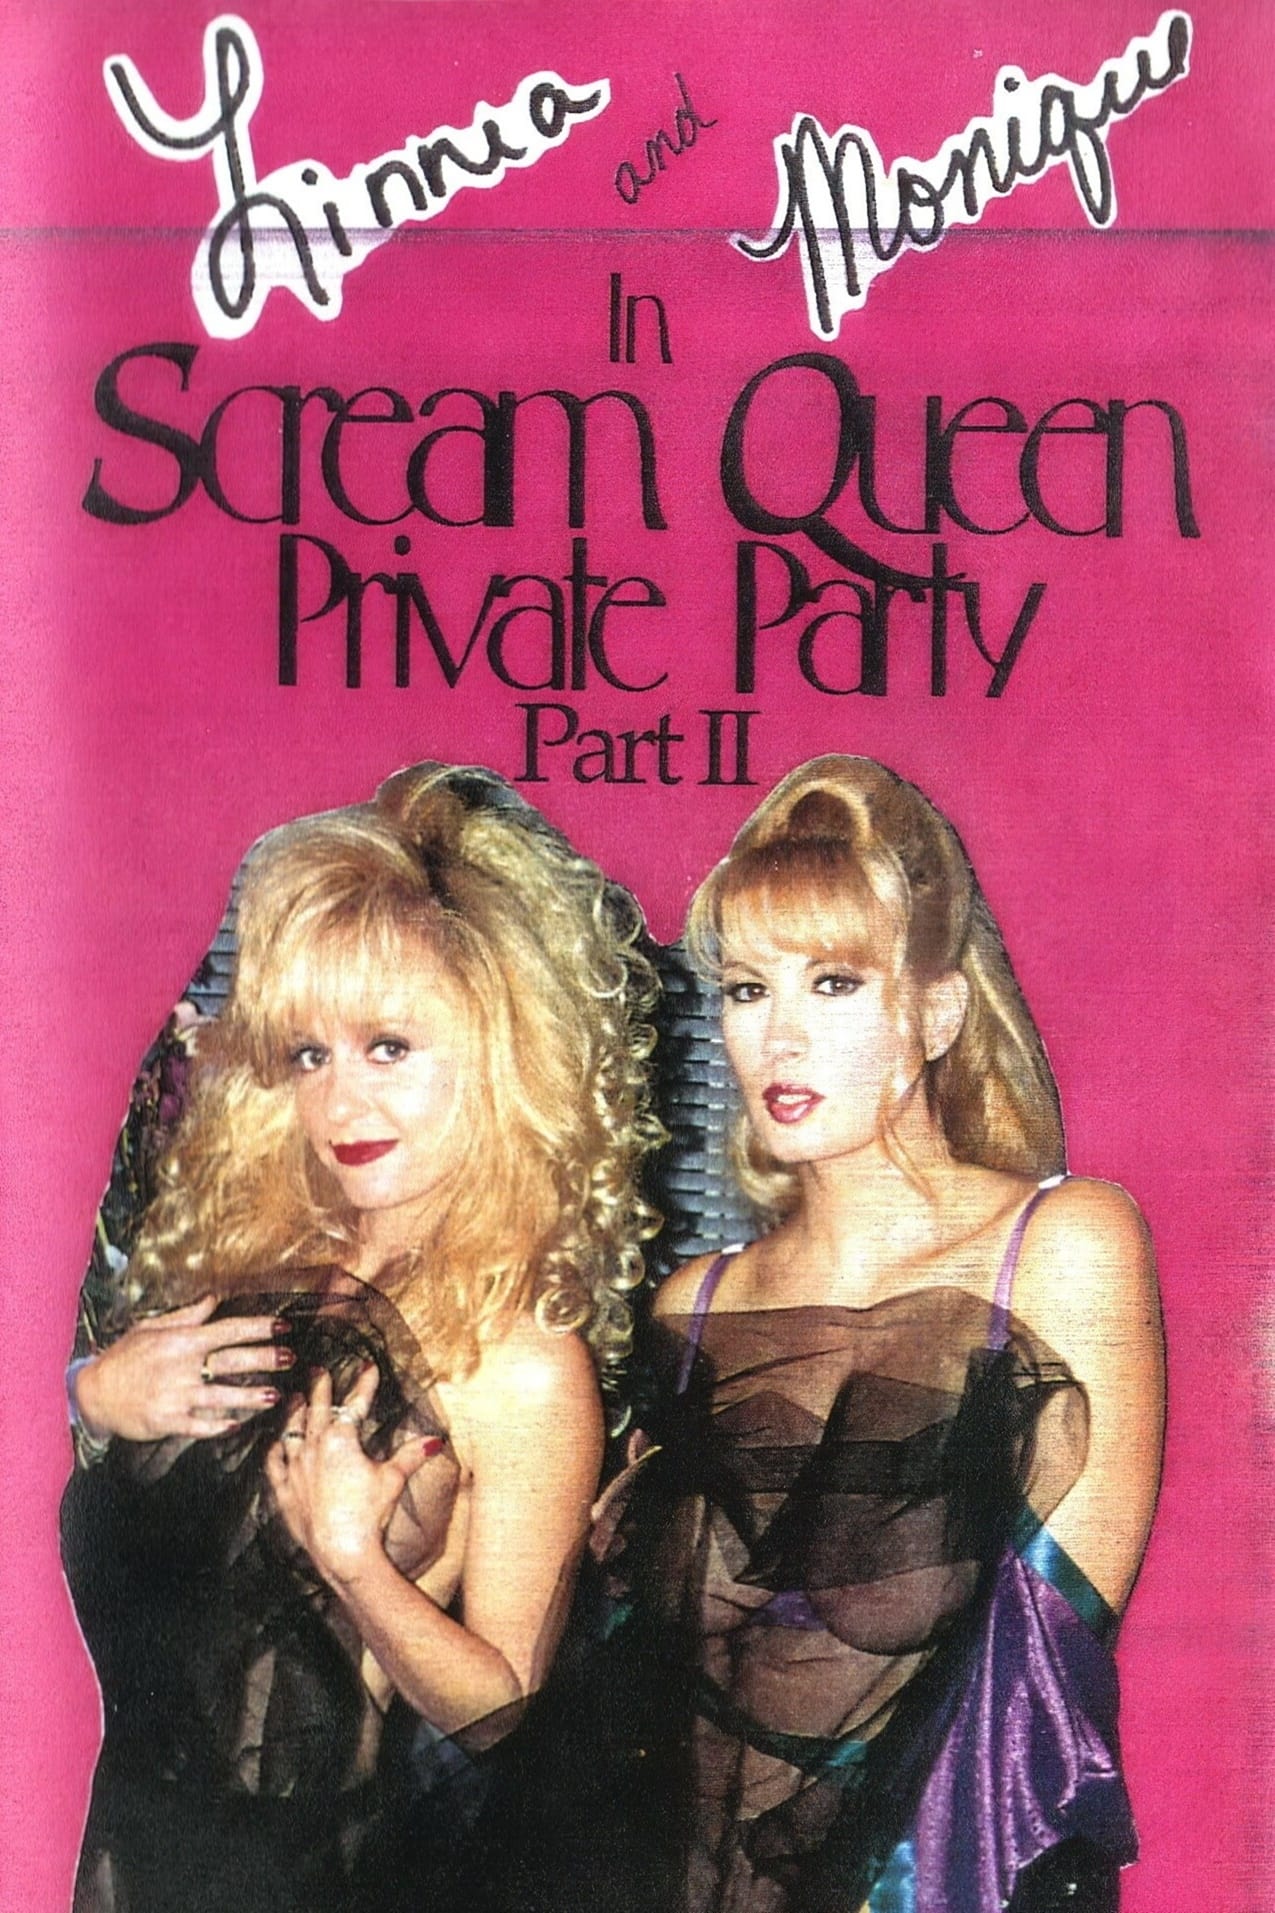 Scream Queen Private Party Part II